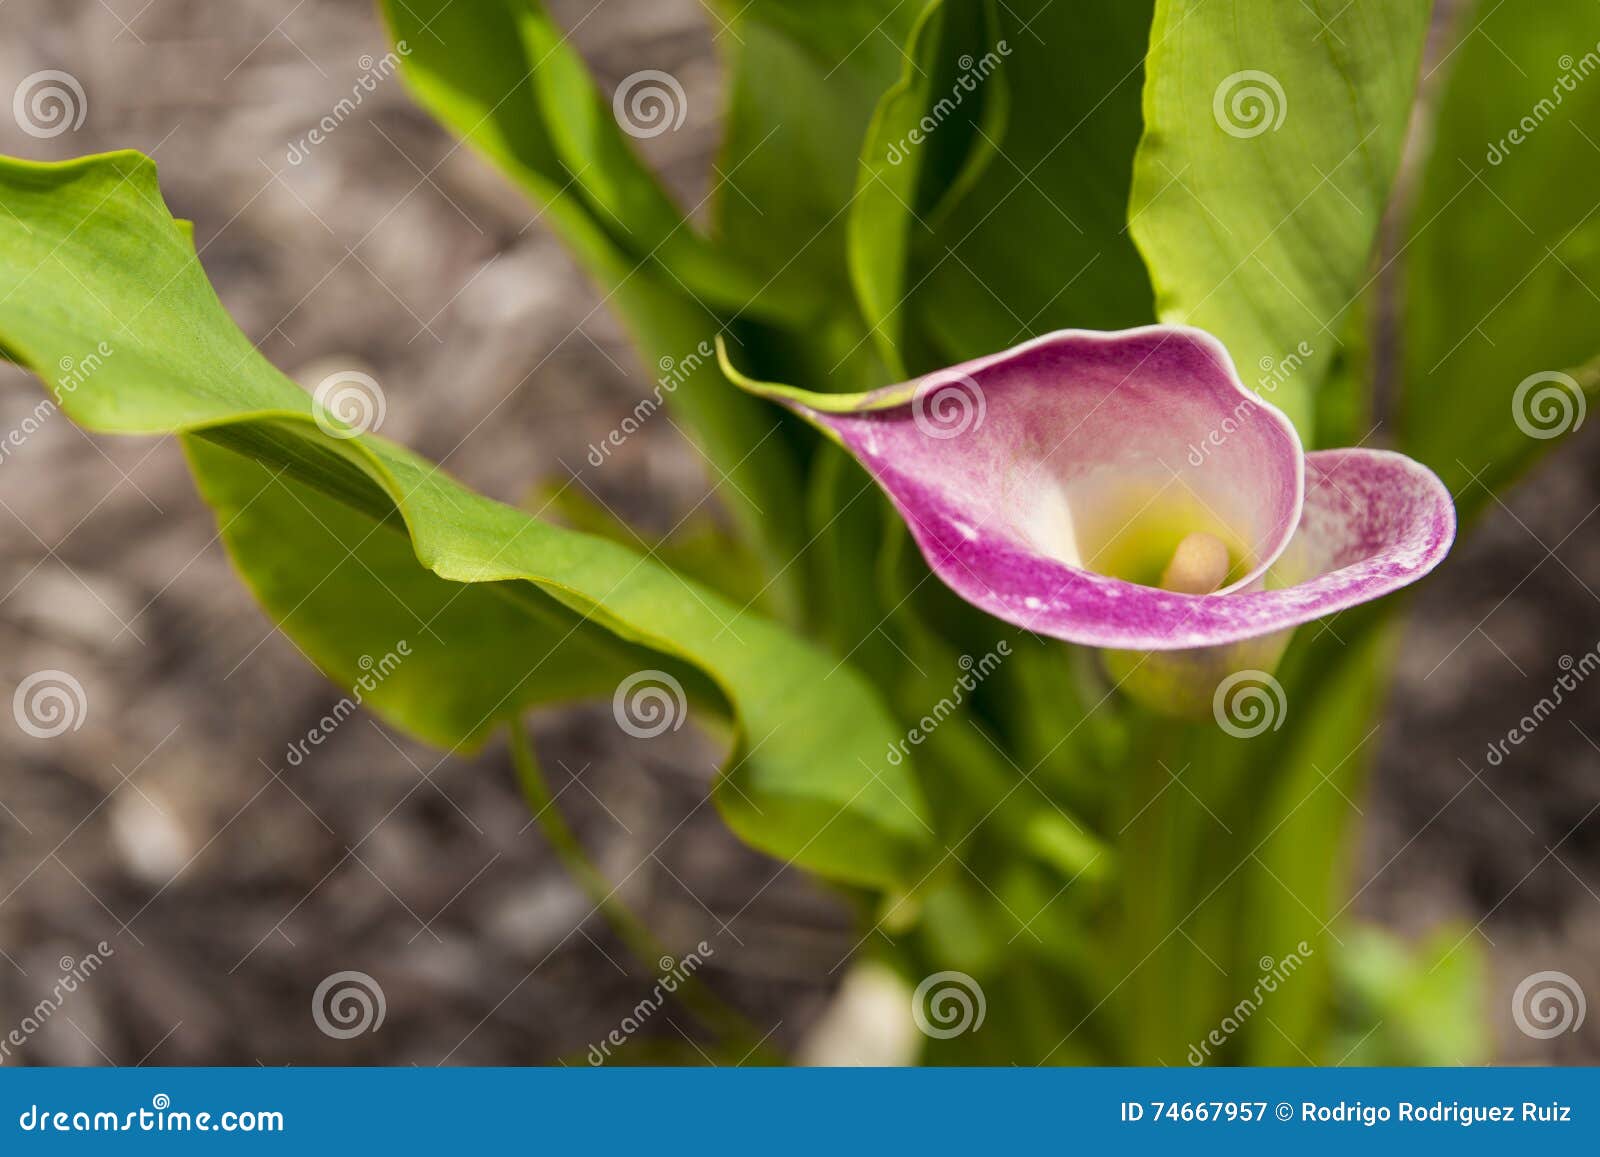 summer calla lily